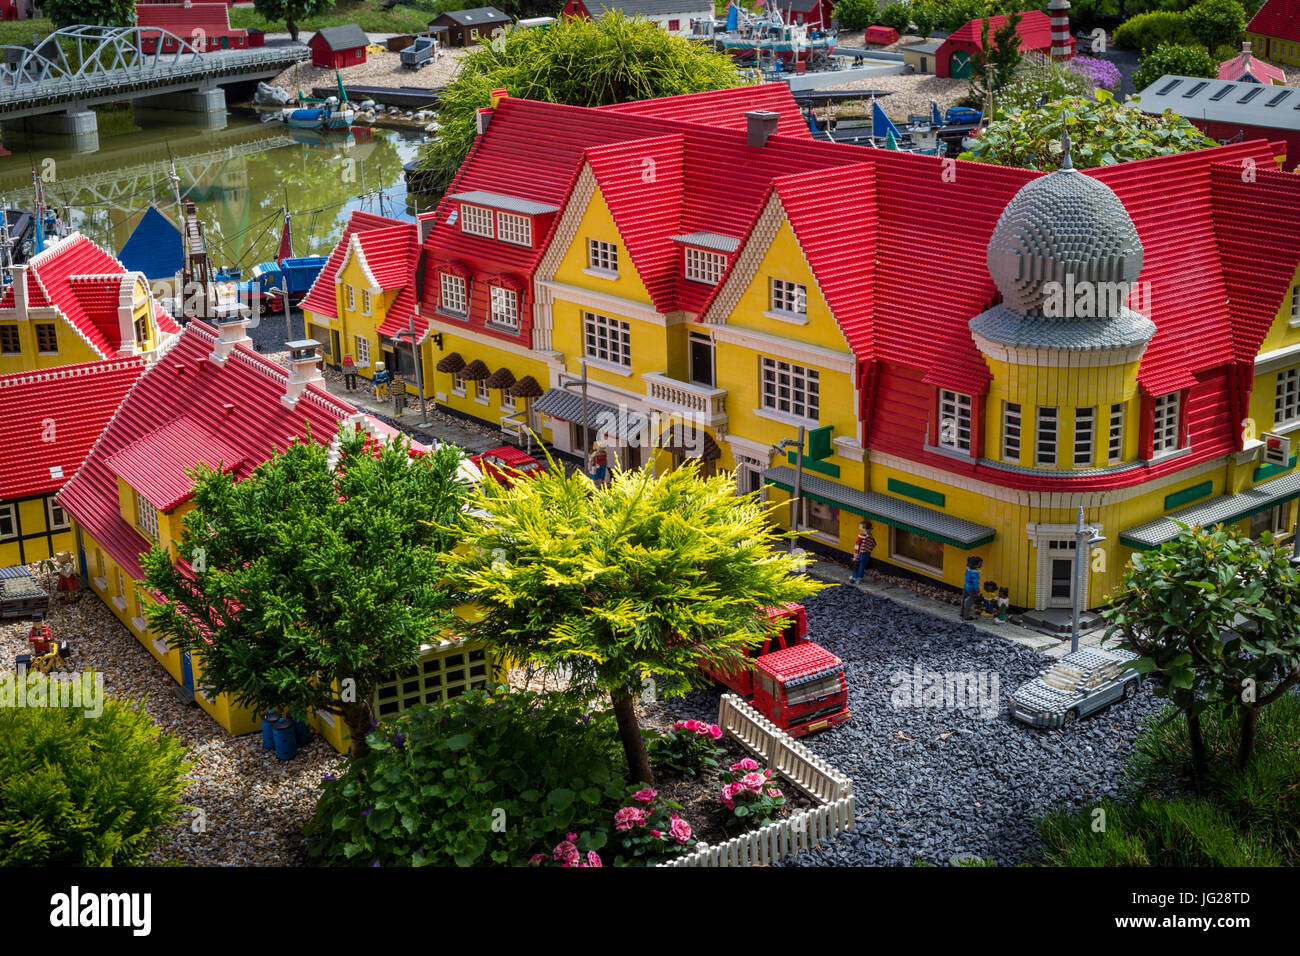 Konsulat metrisk videnskabsmand Billund, Denmark - July 27, 2017: Skagen village made out of lego bricks in  Legoland, Denmark Stock Photo - Alamy